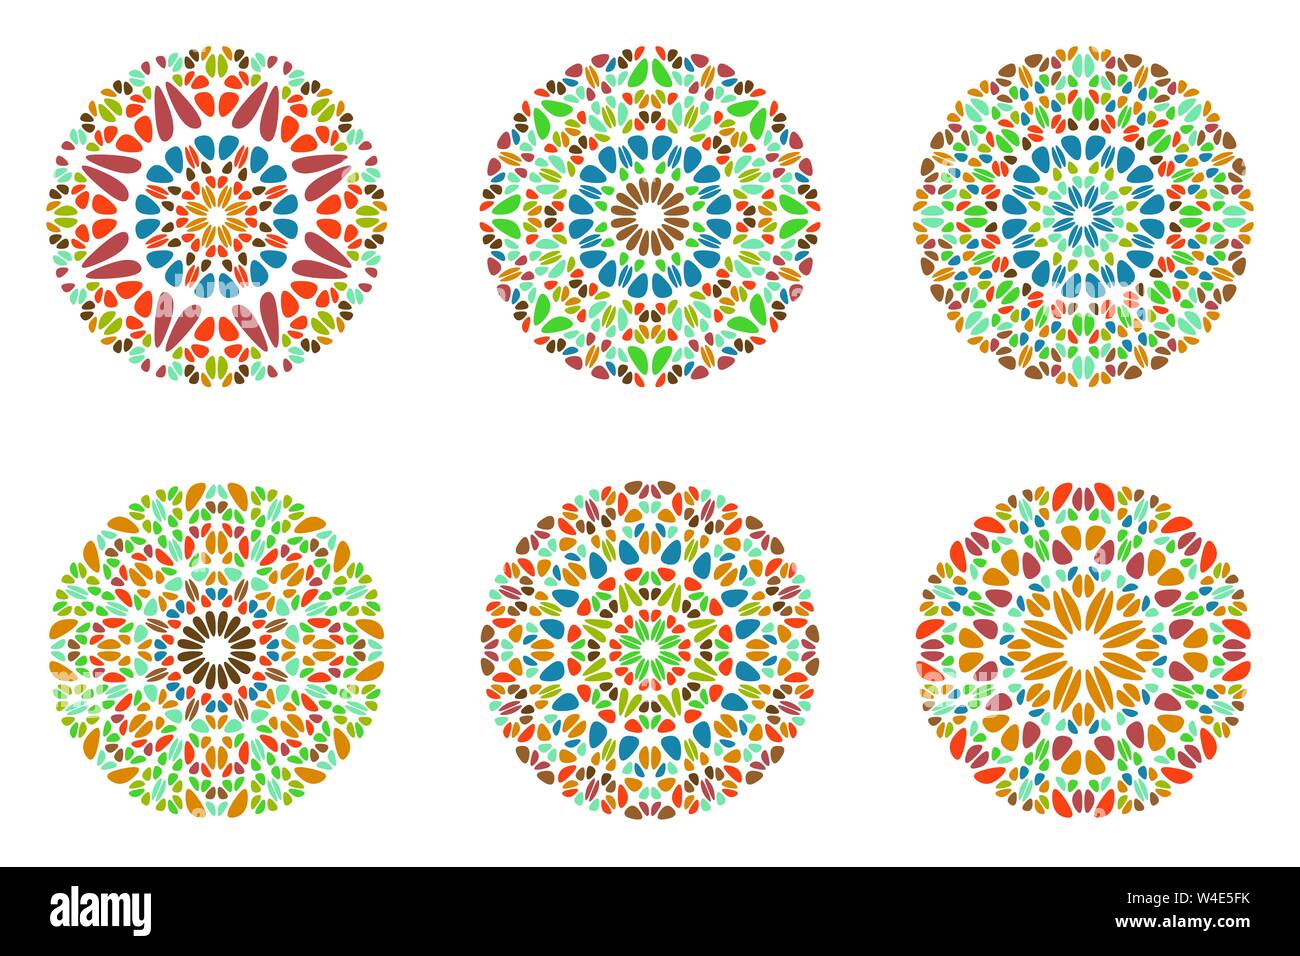 Abstrakte runde bunt verzierten Blütenblatt mandala Logo - geometrische Vektorgrafik Elemente aus geschwungenen Formen Stock Vektor